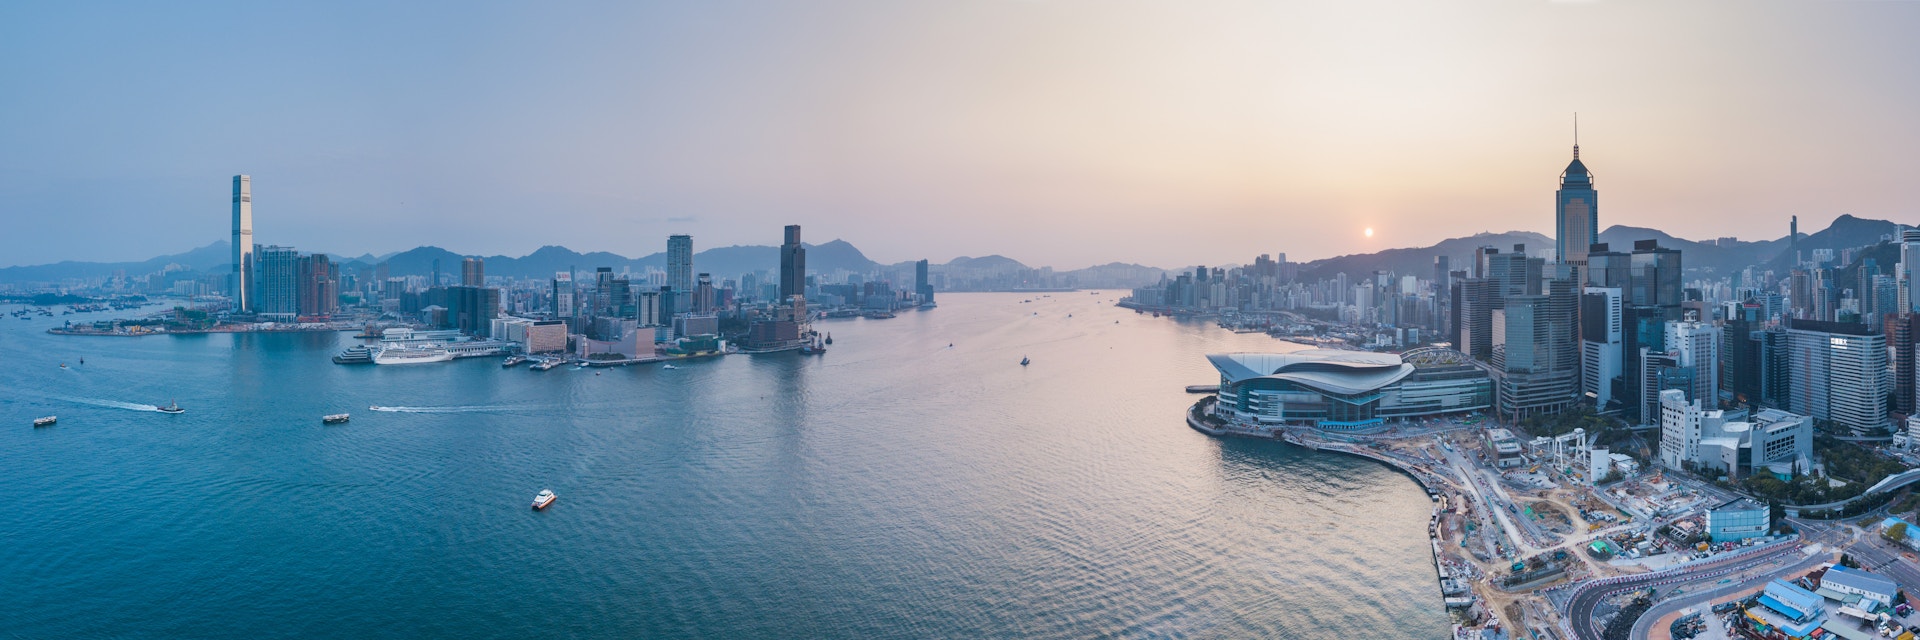 Hong Kong Travel Photography View over Victoria Harbour and Hong Kong at sunset China Drone